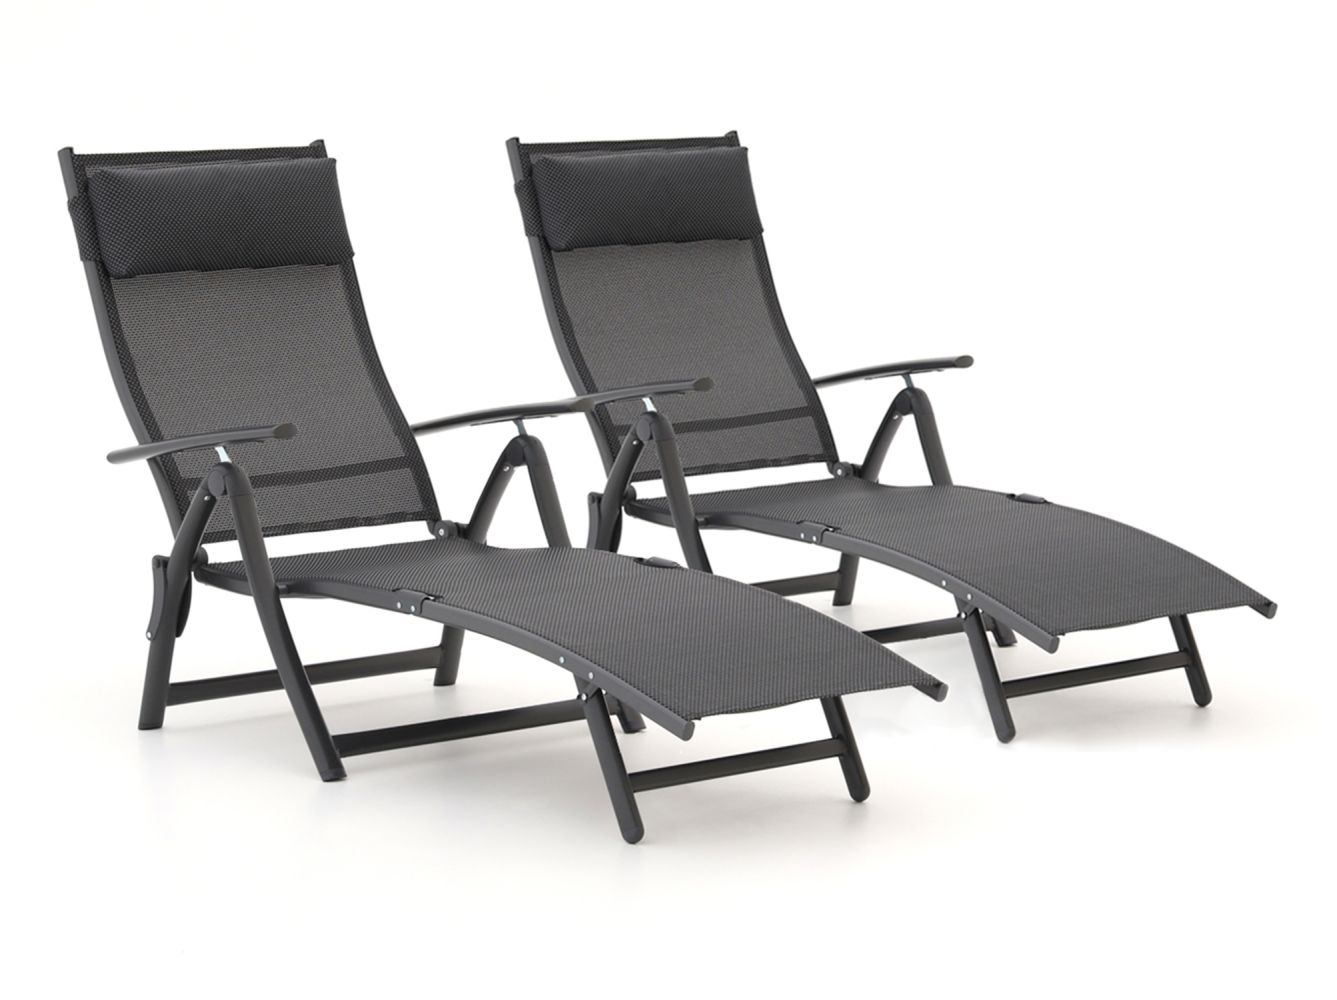 R&S Design Capri ligbed set - - Kees Smit